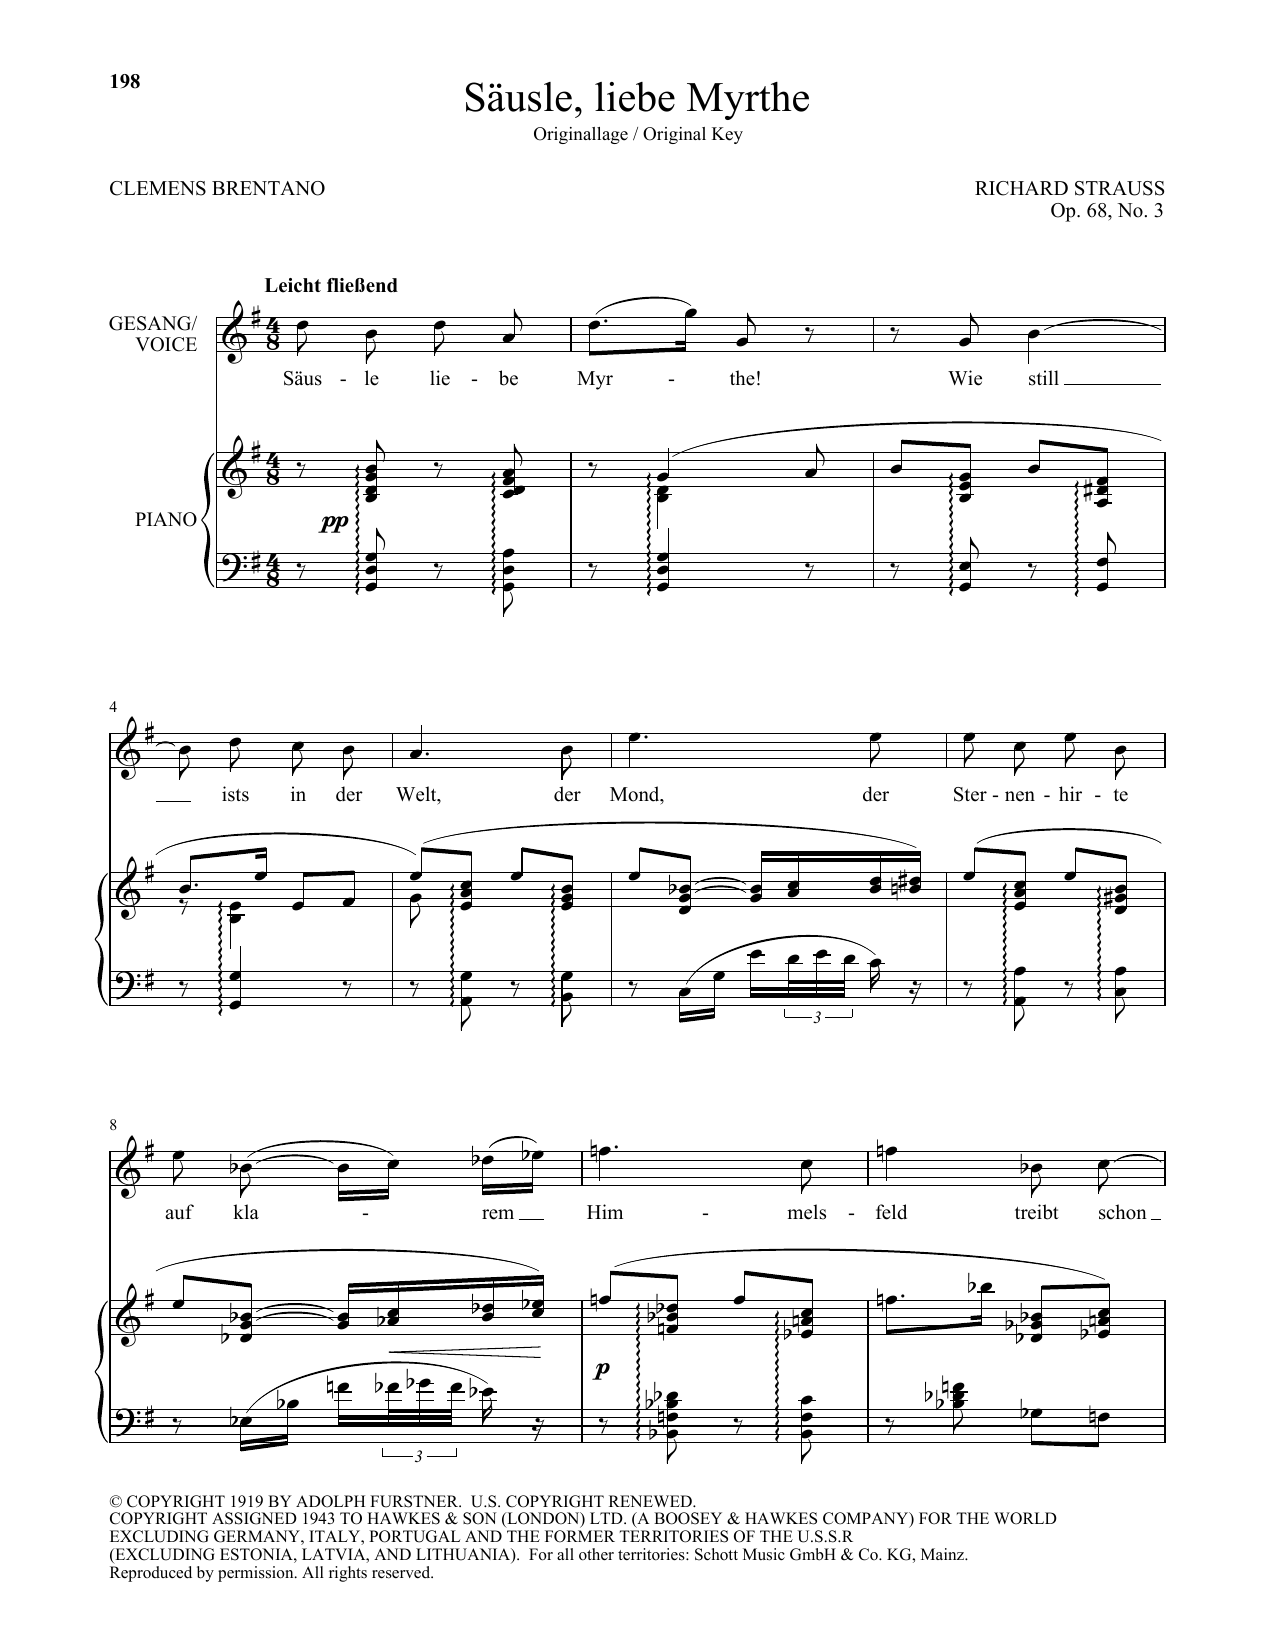 Download Richard Strauss Sausle, Liebe Myrthe (High Voice) Sheet Music